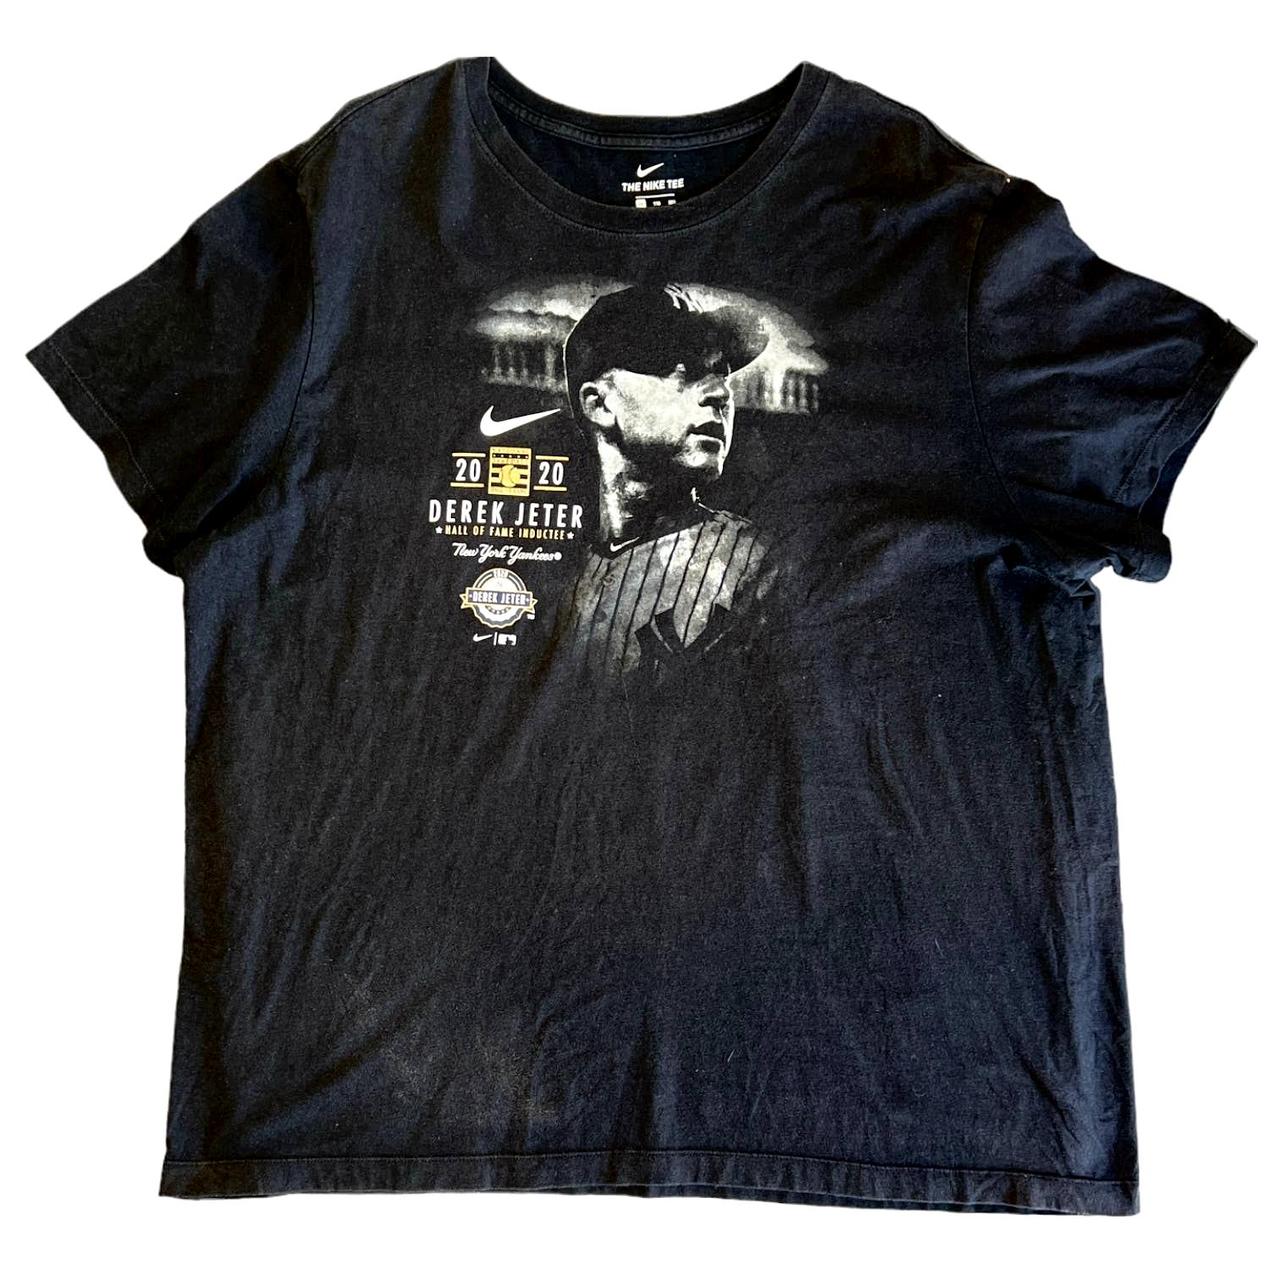 New York Yankees Derek Jeter Gray T-Shirt by Nike